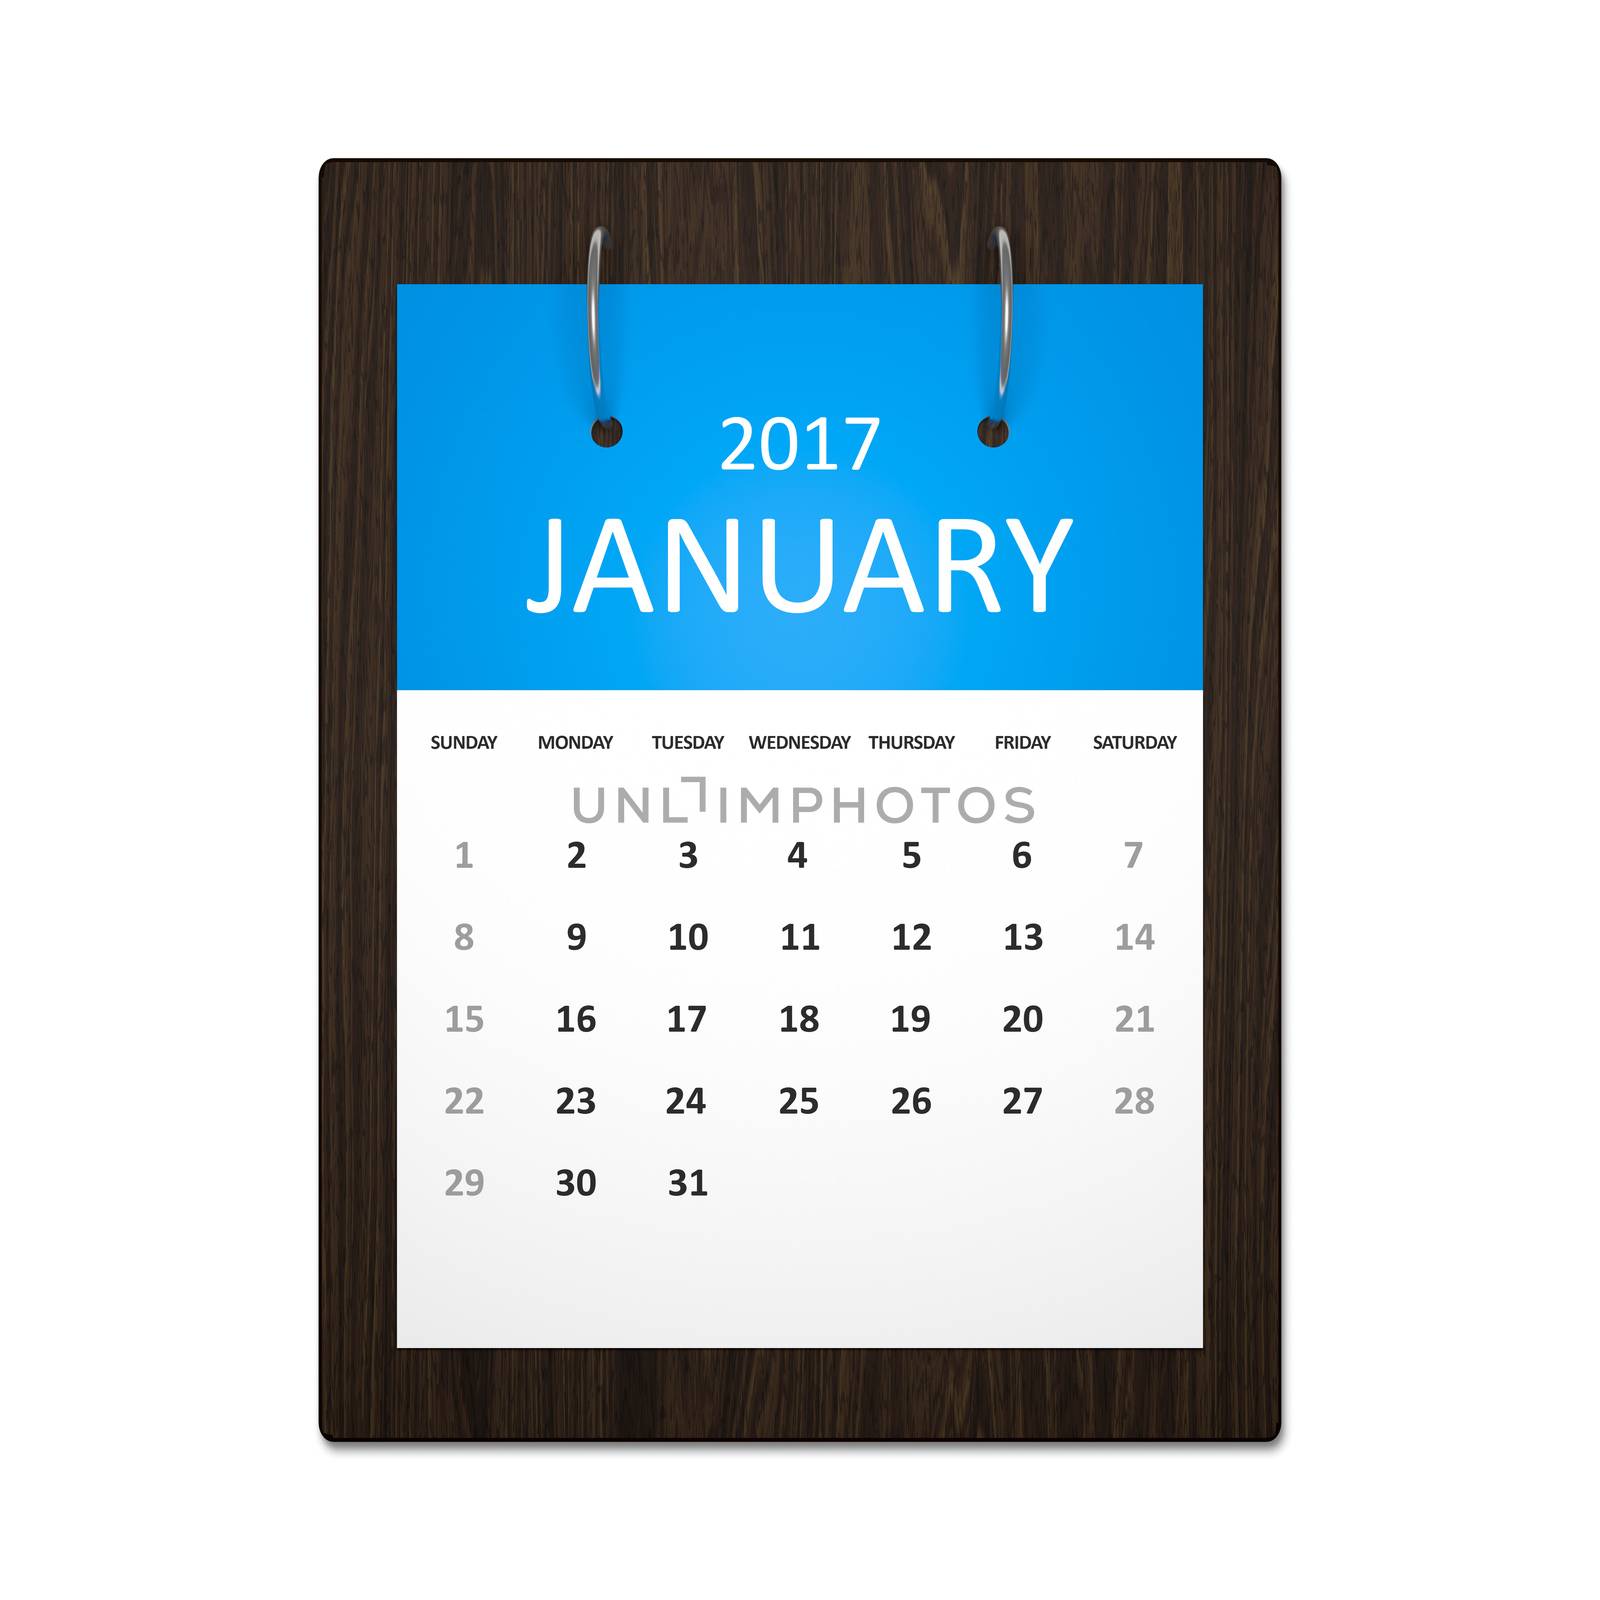 Calendar Planning 2017 by magann